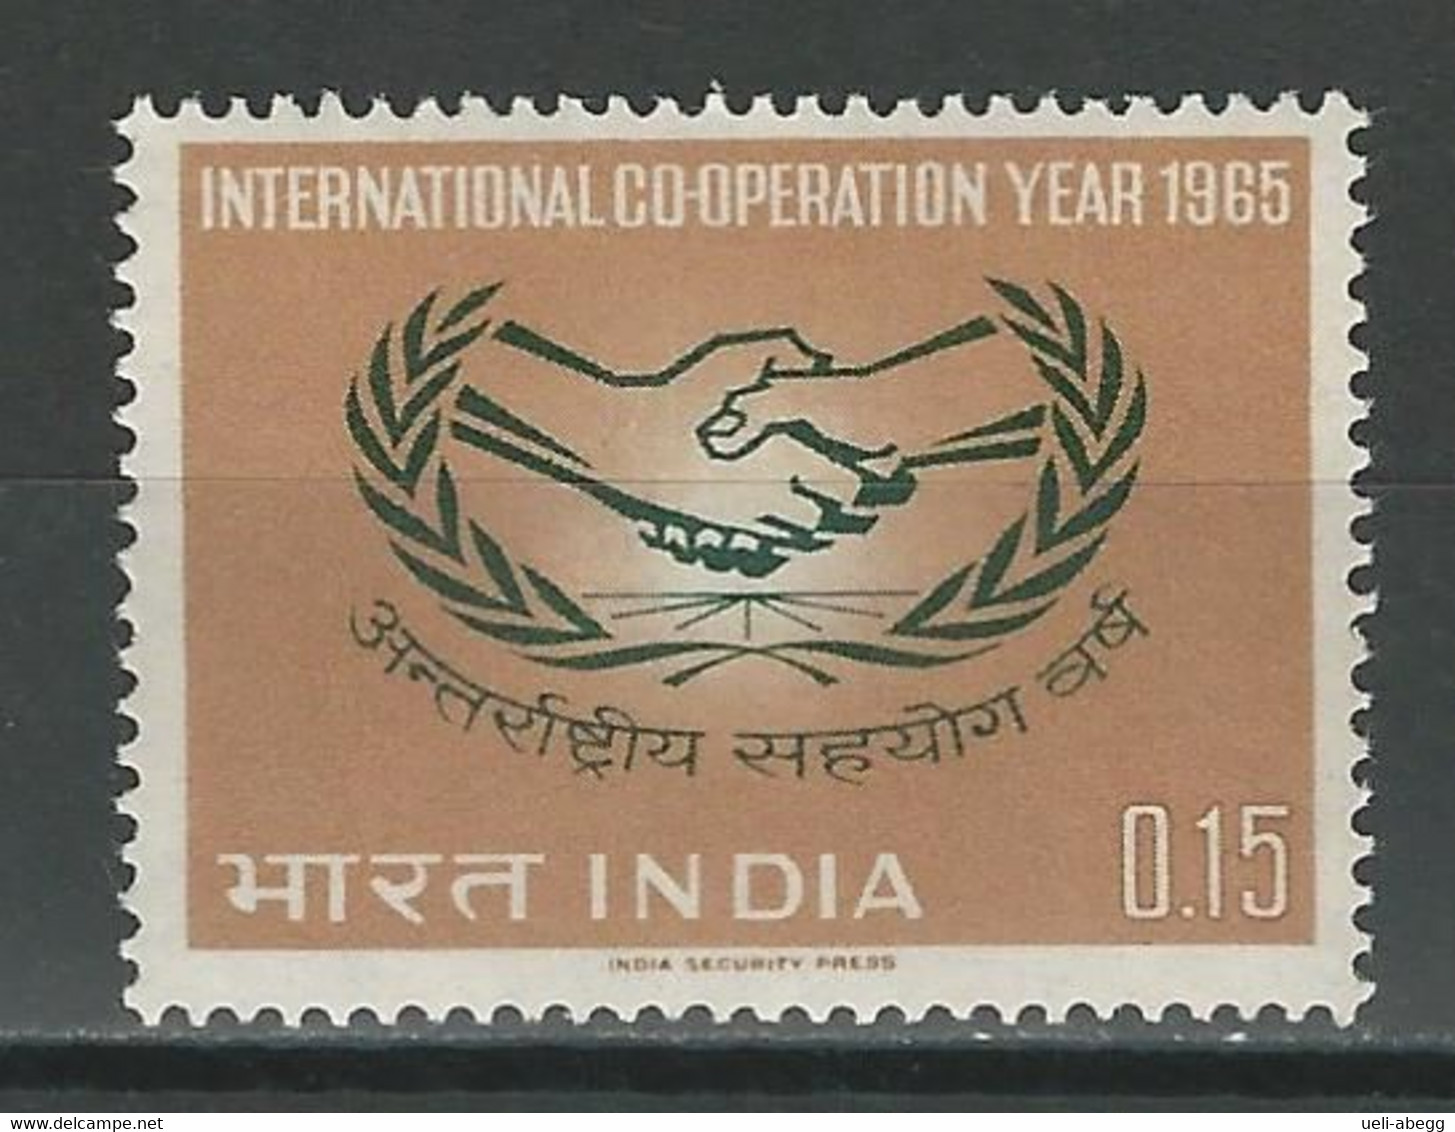 Indien Mi 388, SG 502 ** Mnh - Unused Stamps